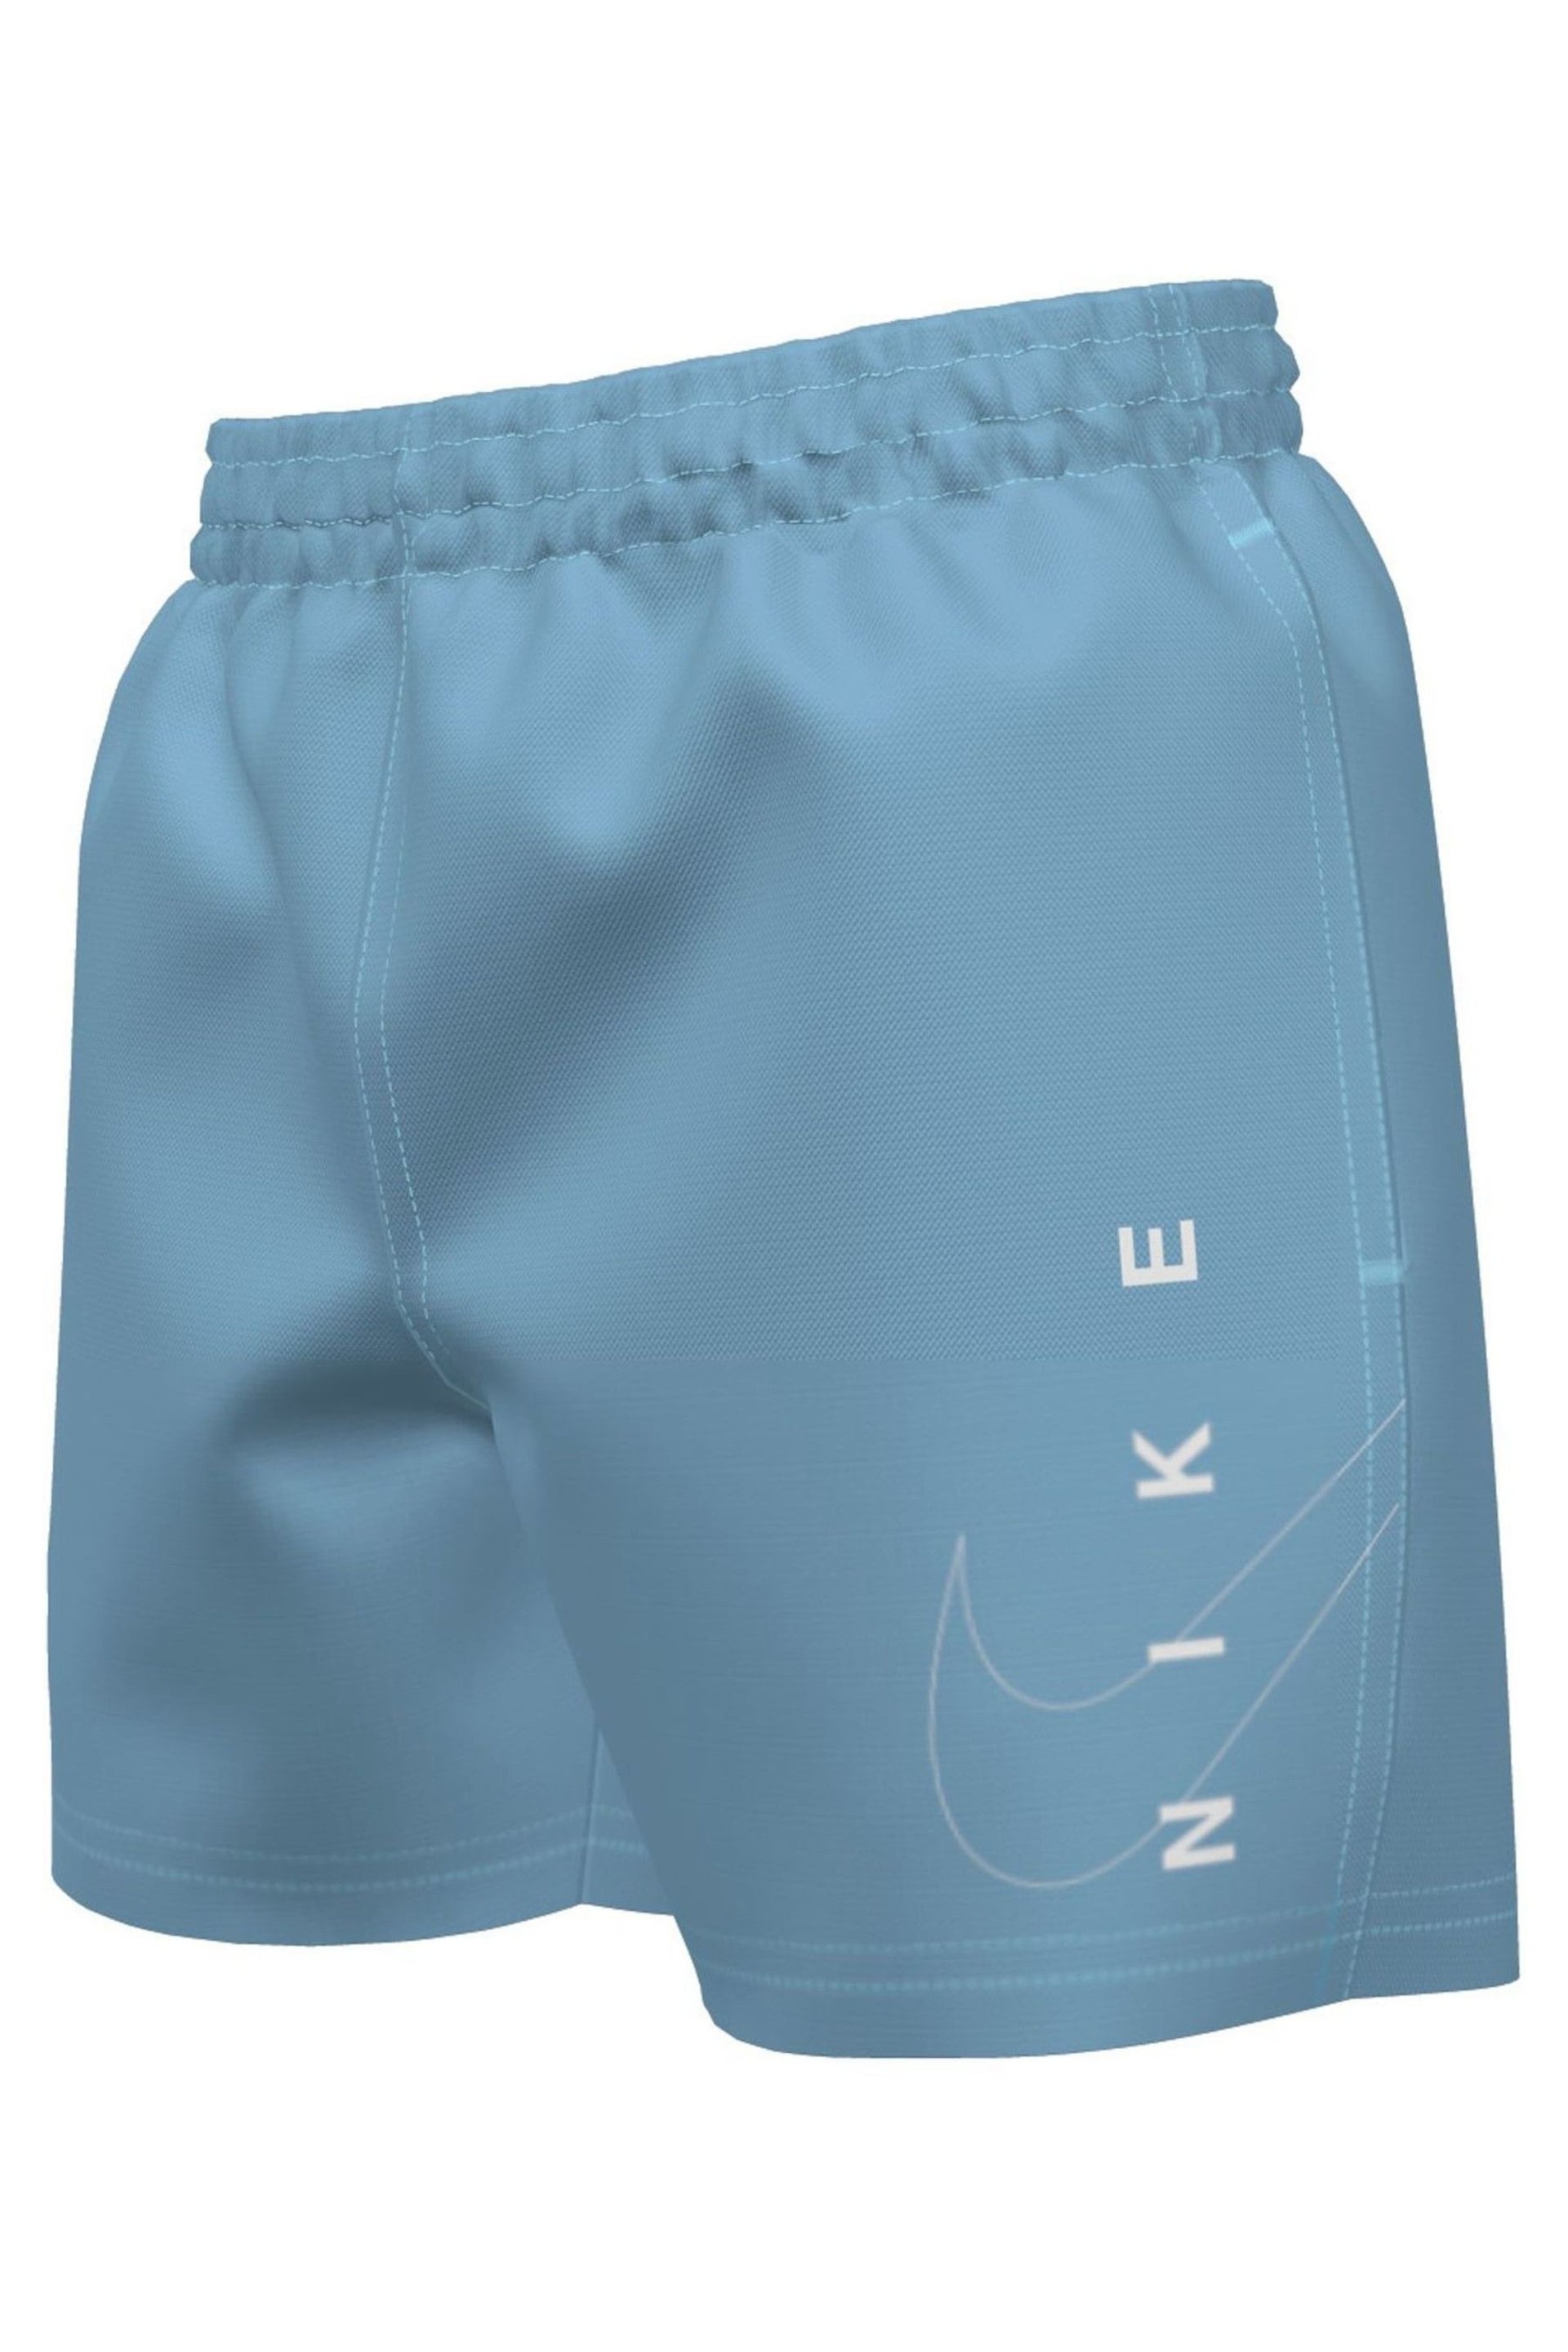 Nike Blue Nike Swim 4 Volley Shorts - Image 3 of 5